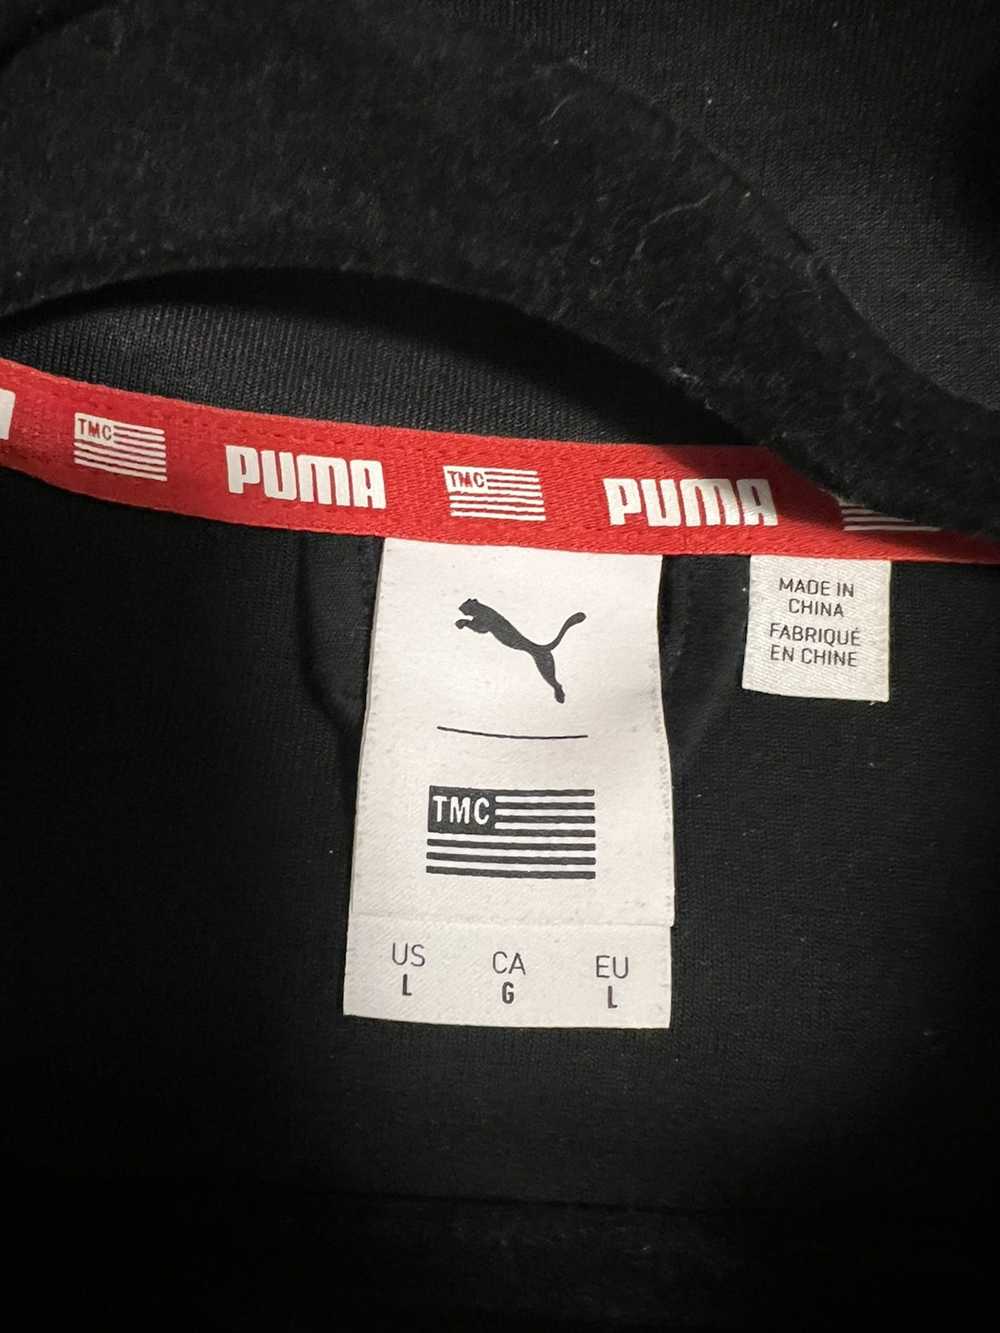 Puma Puma x The Marathon track jacket - image 5